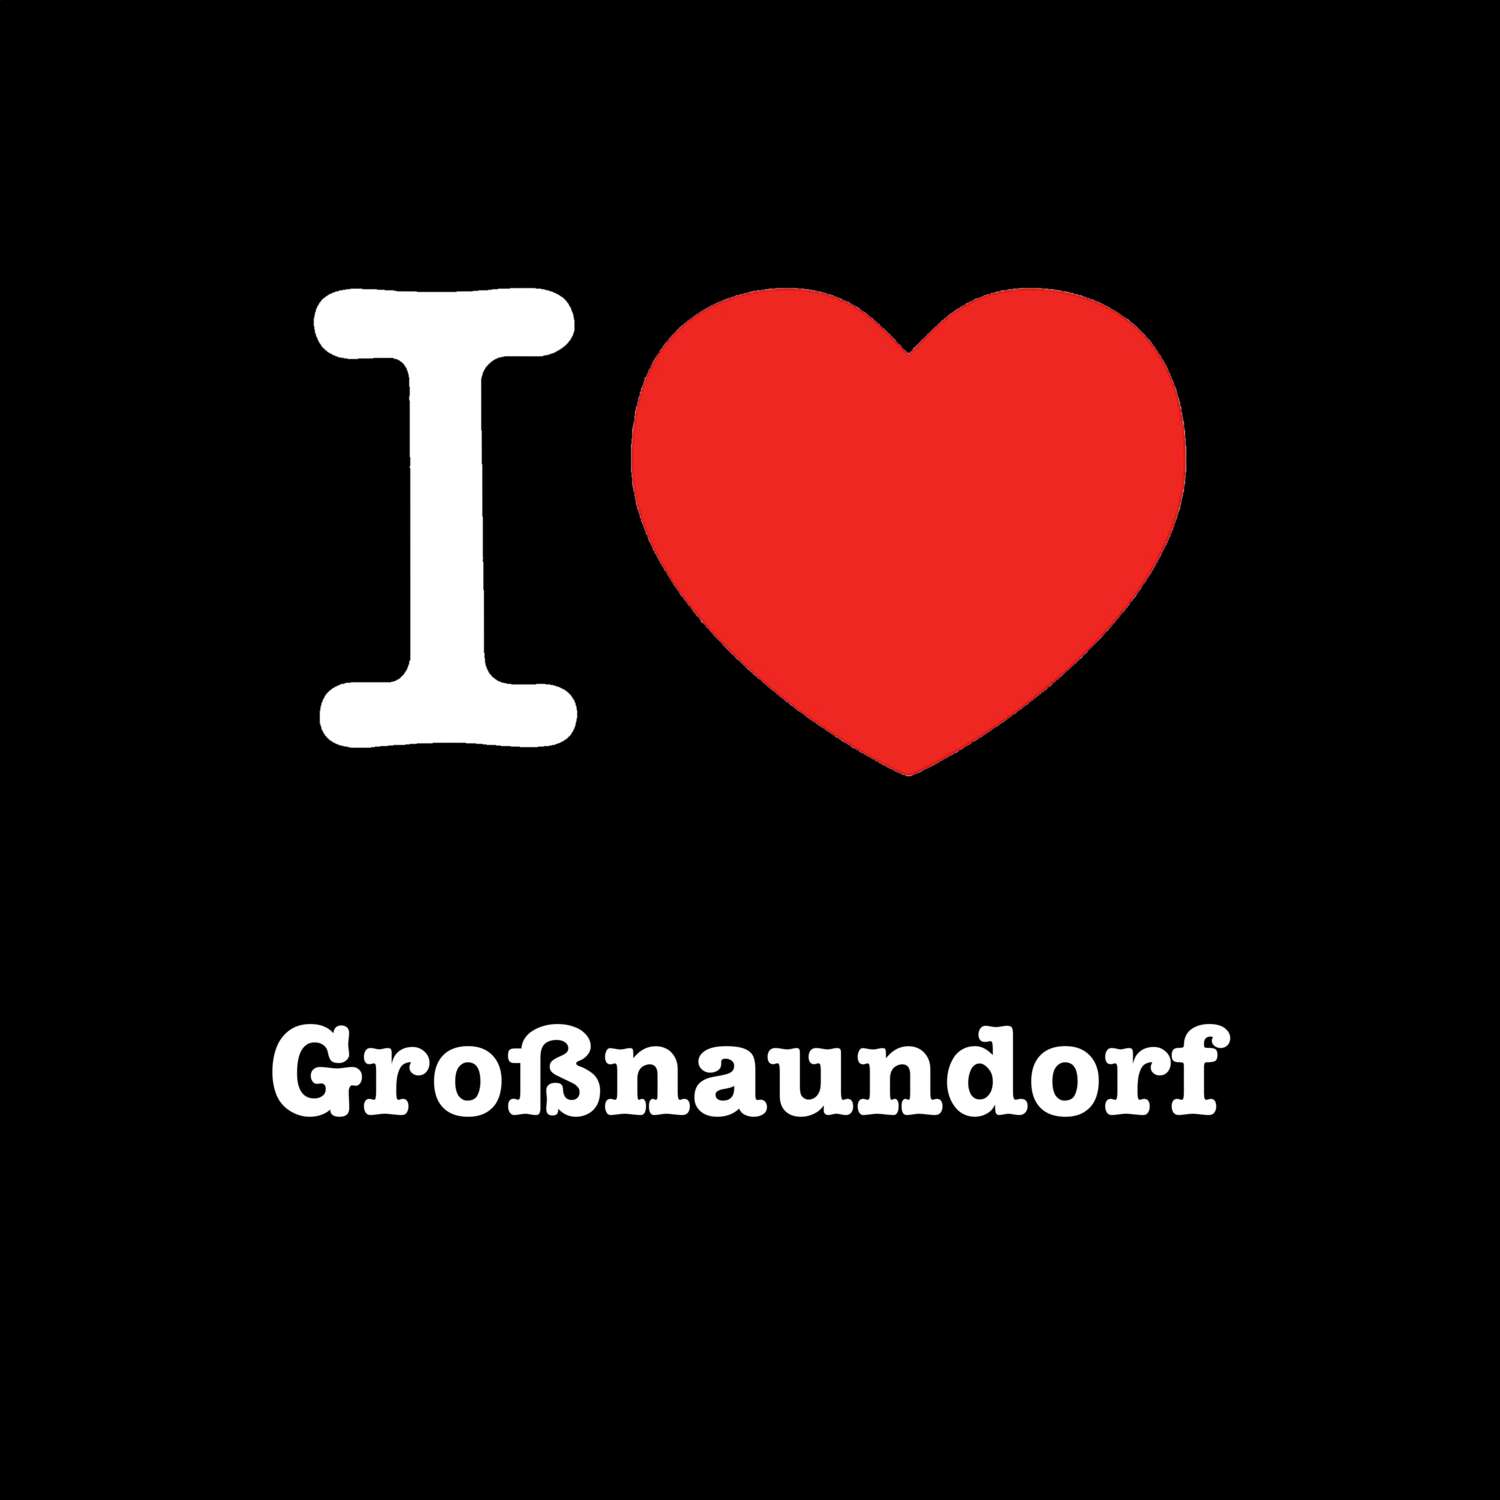 Großnaundorf T-Shirt »I love«